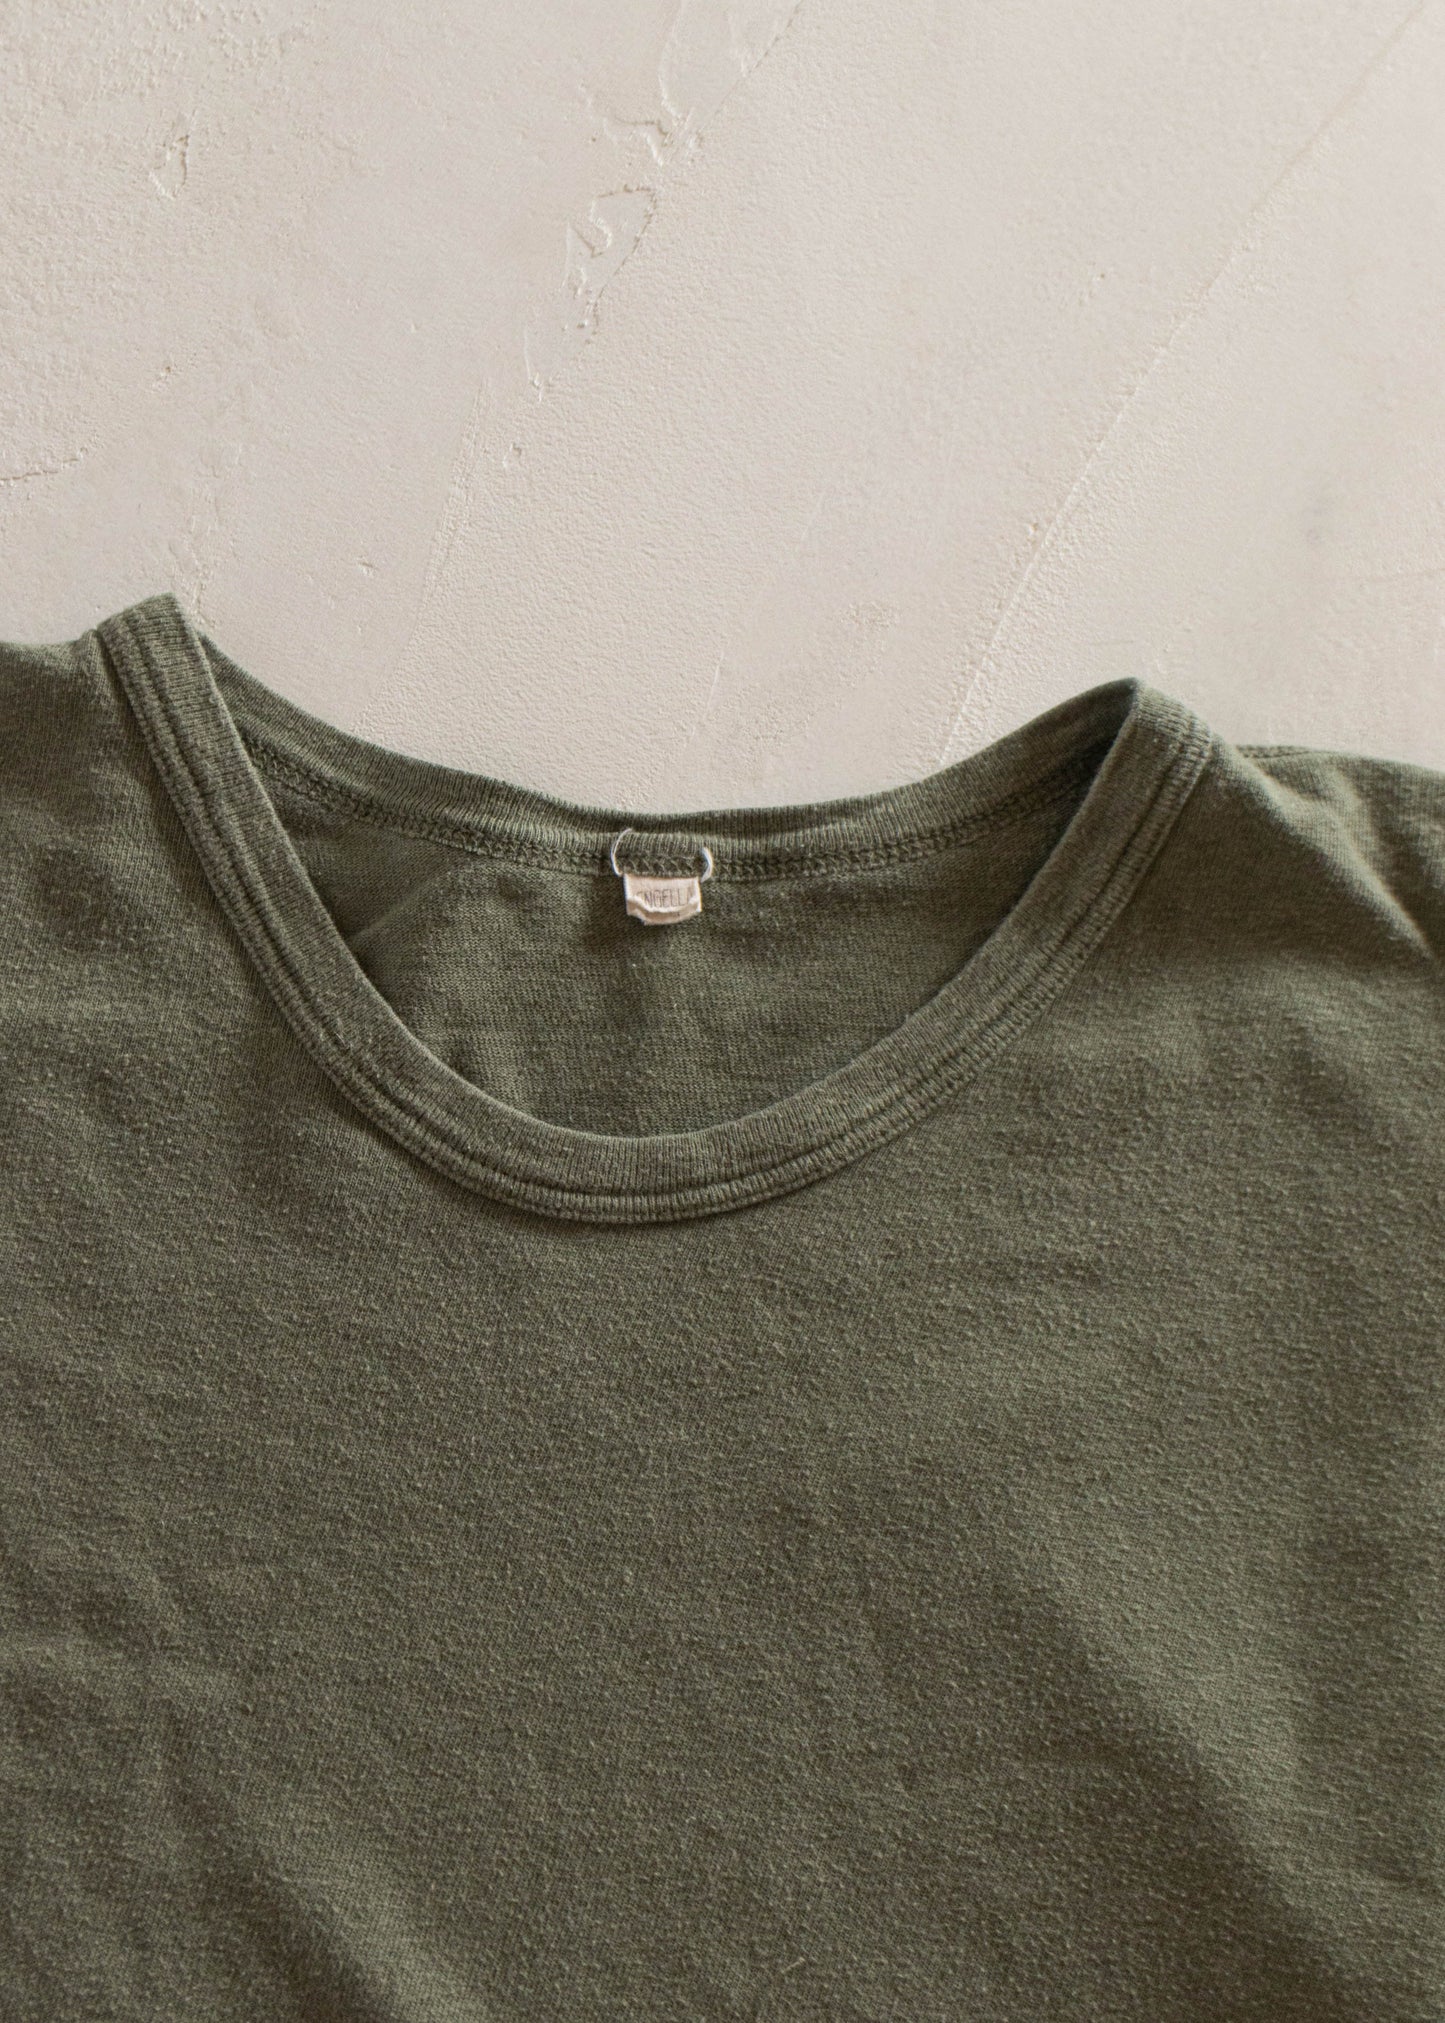 1980s Military T-Shirt Size M/L